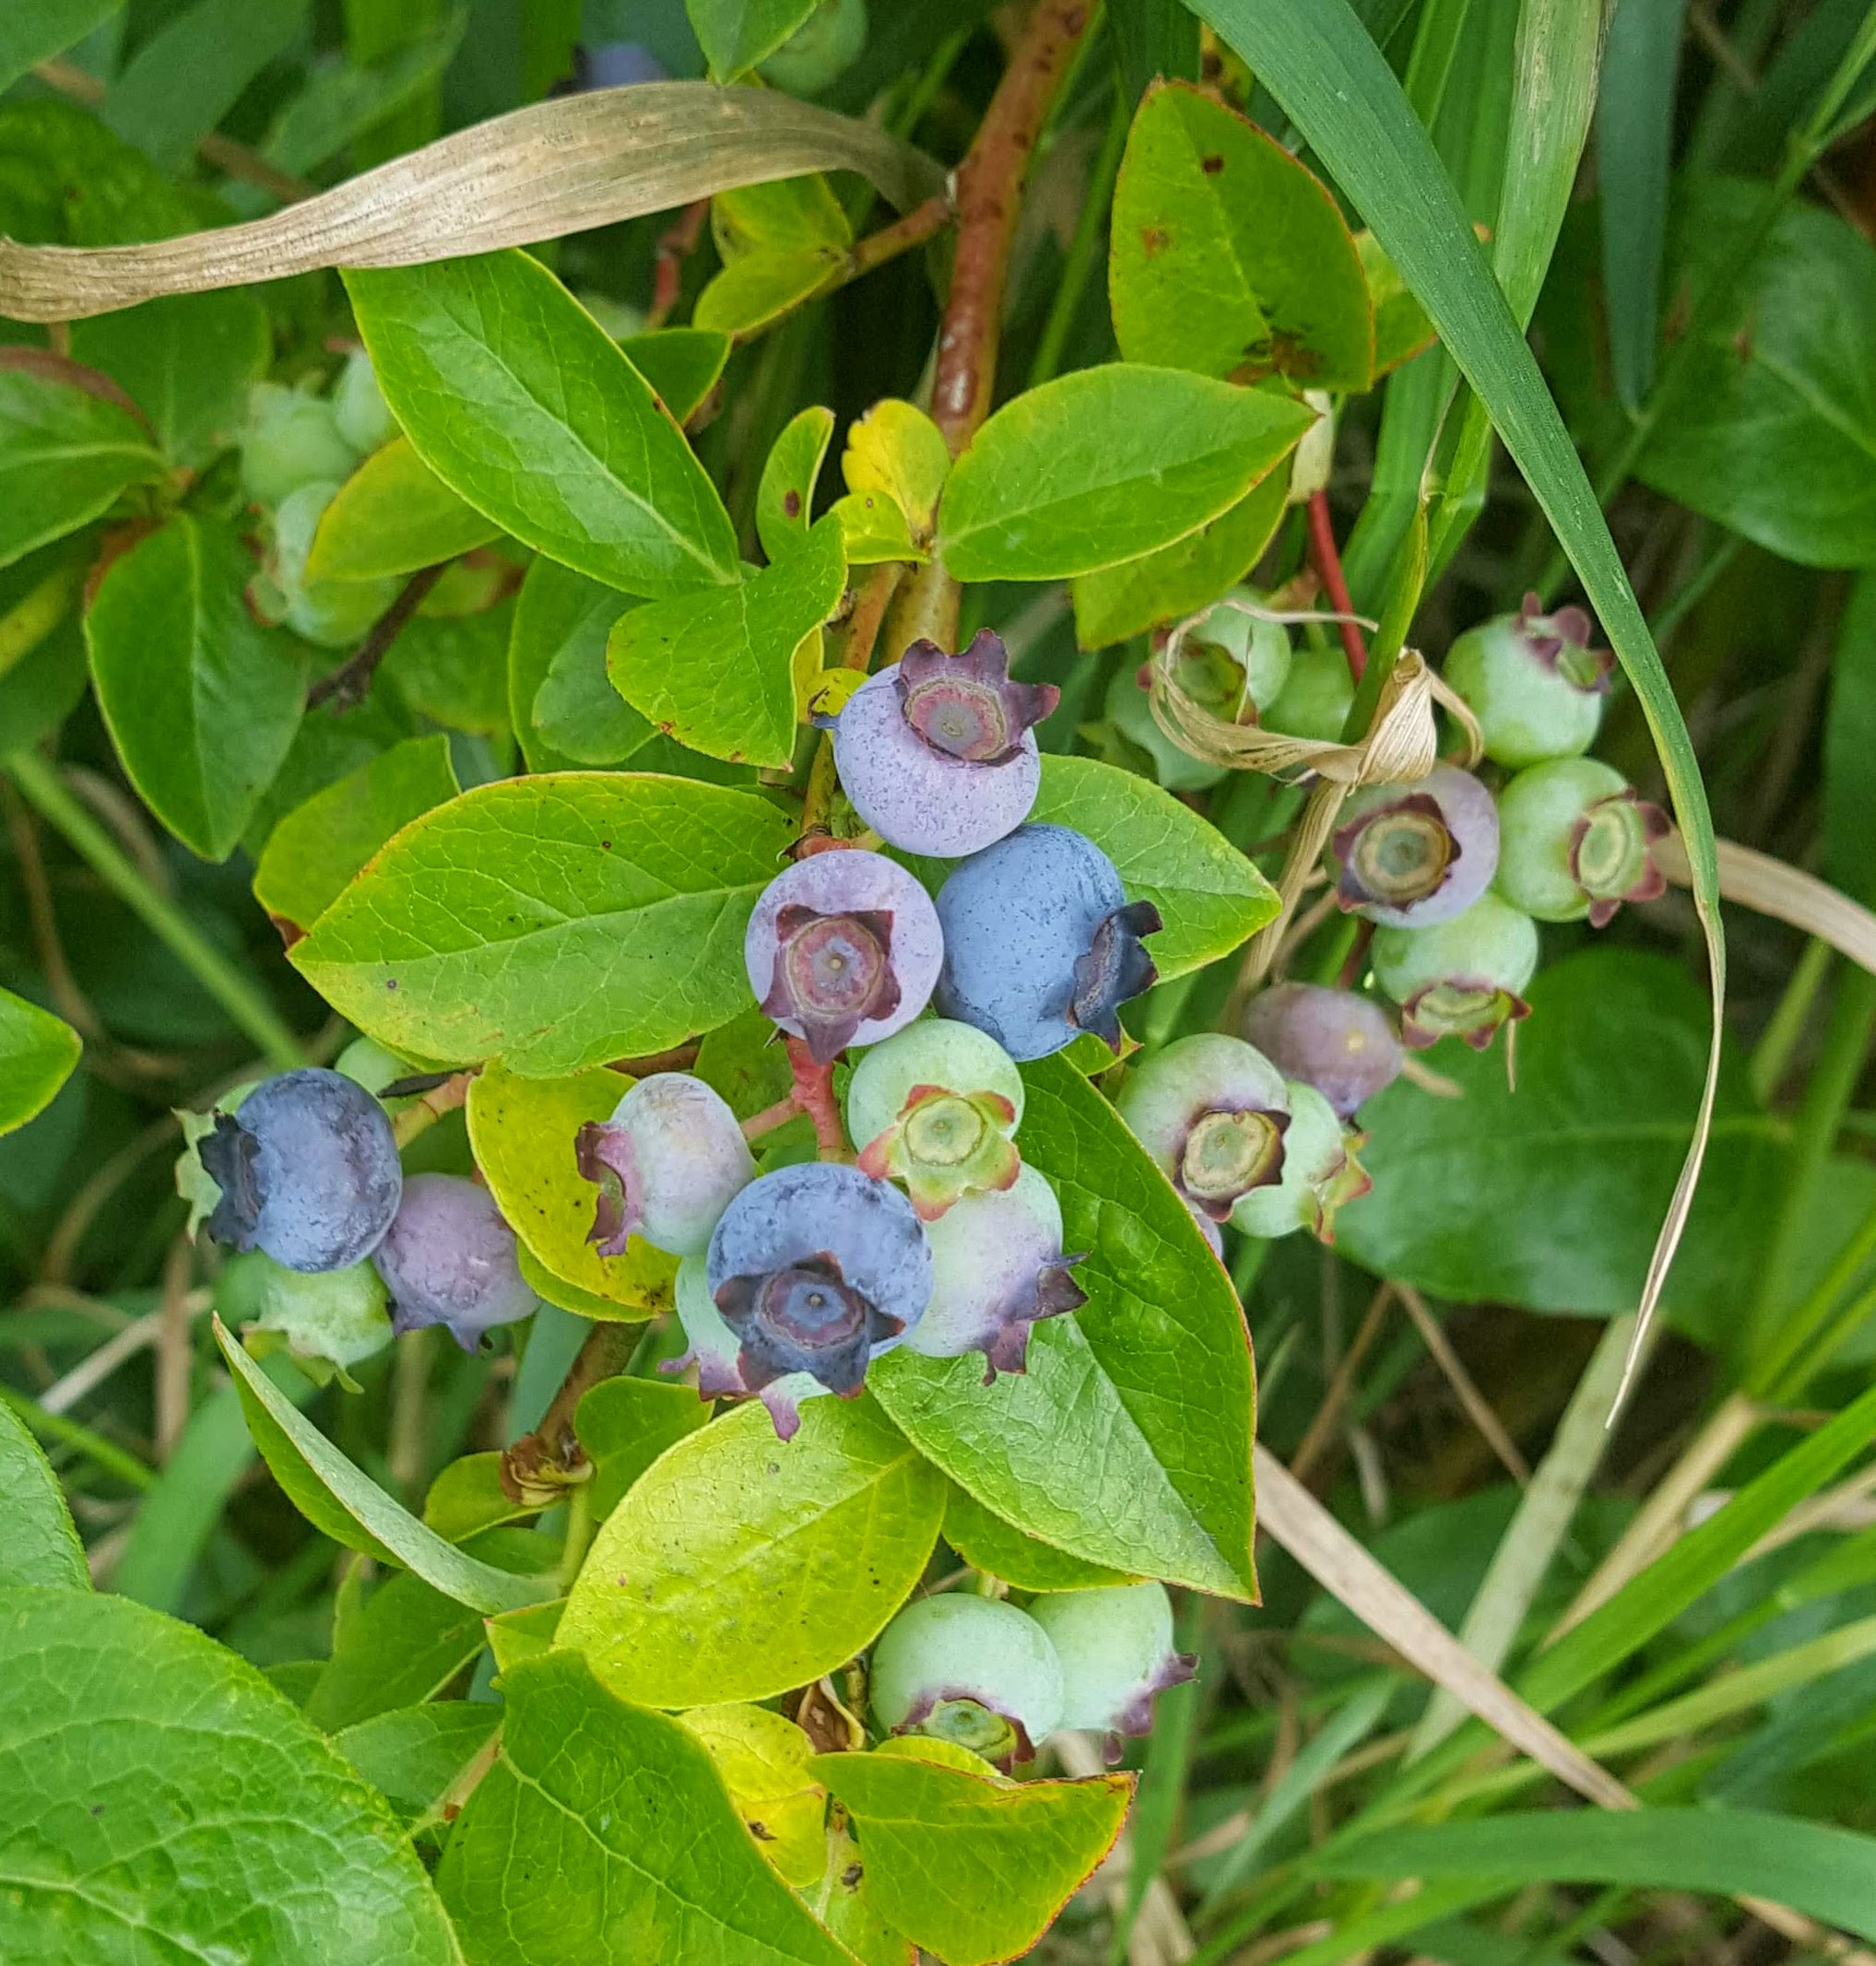 Bluetta blueberries